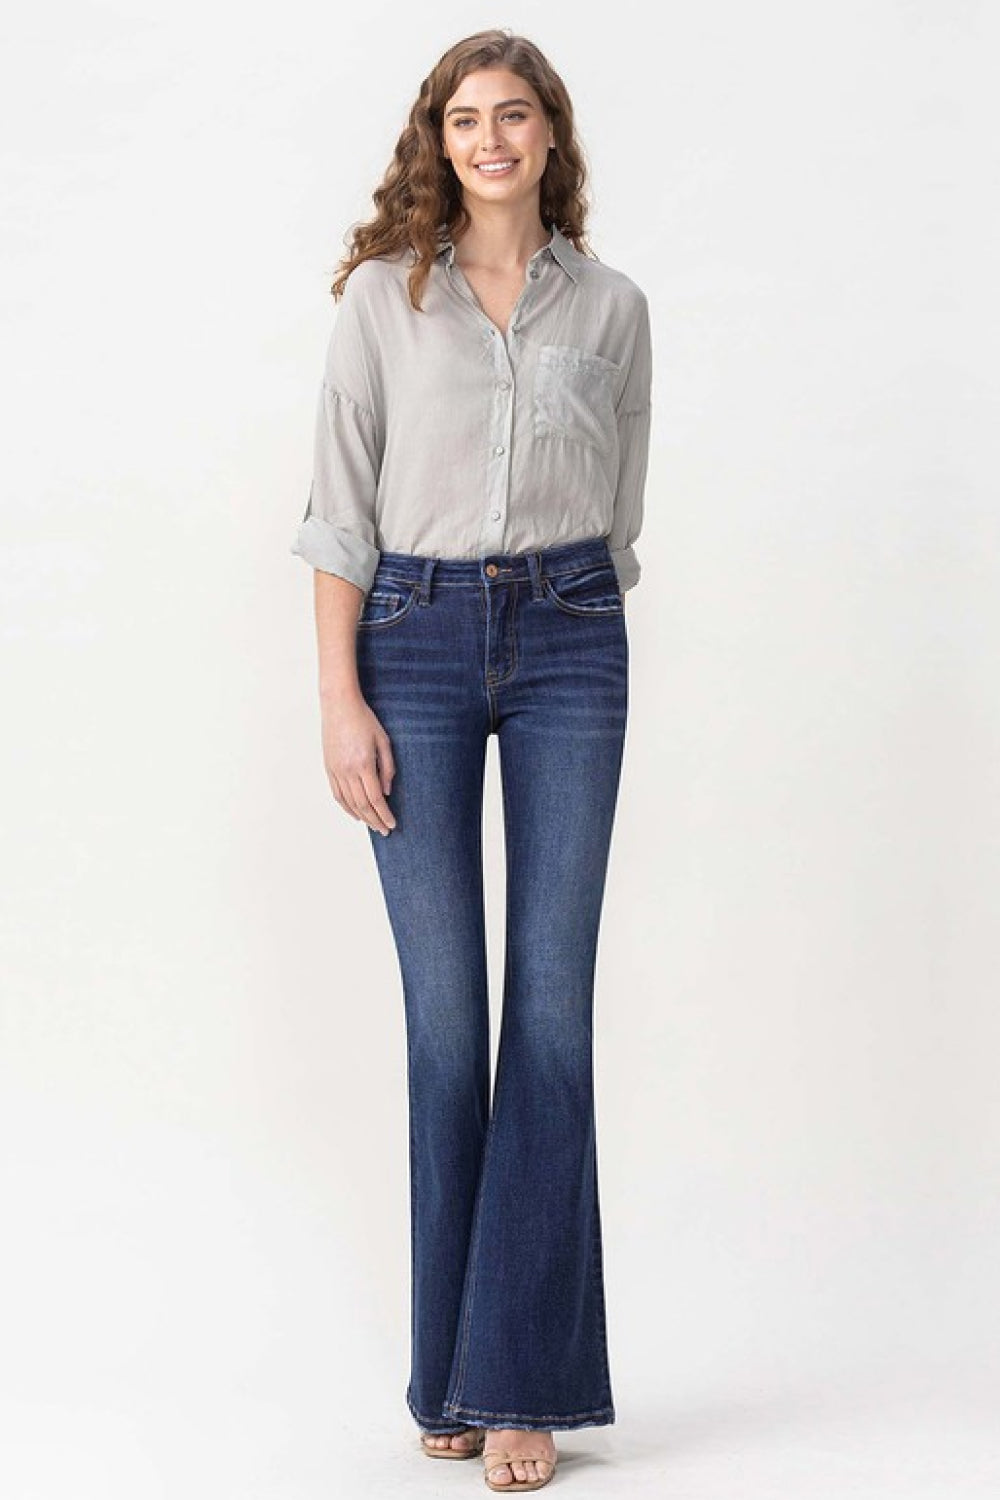 Lovervet Joanna Midrise Flare Jeans